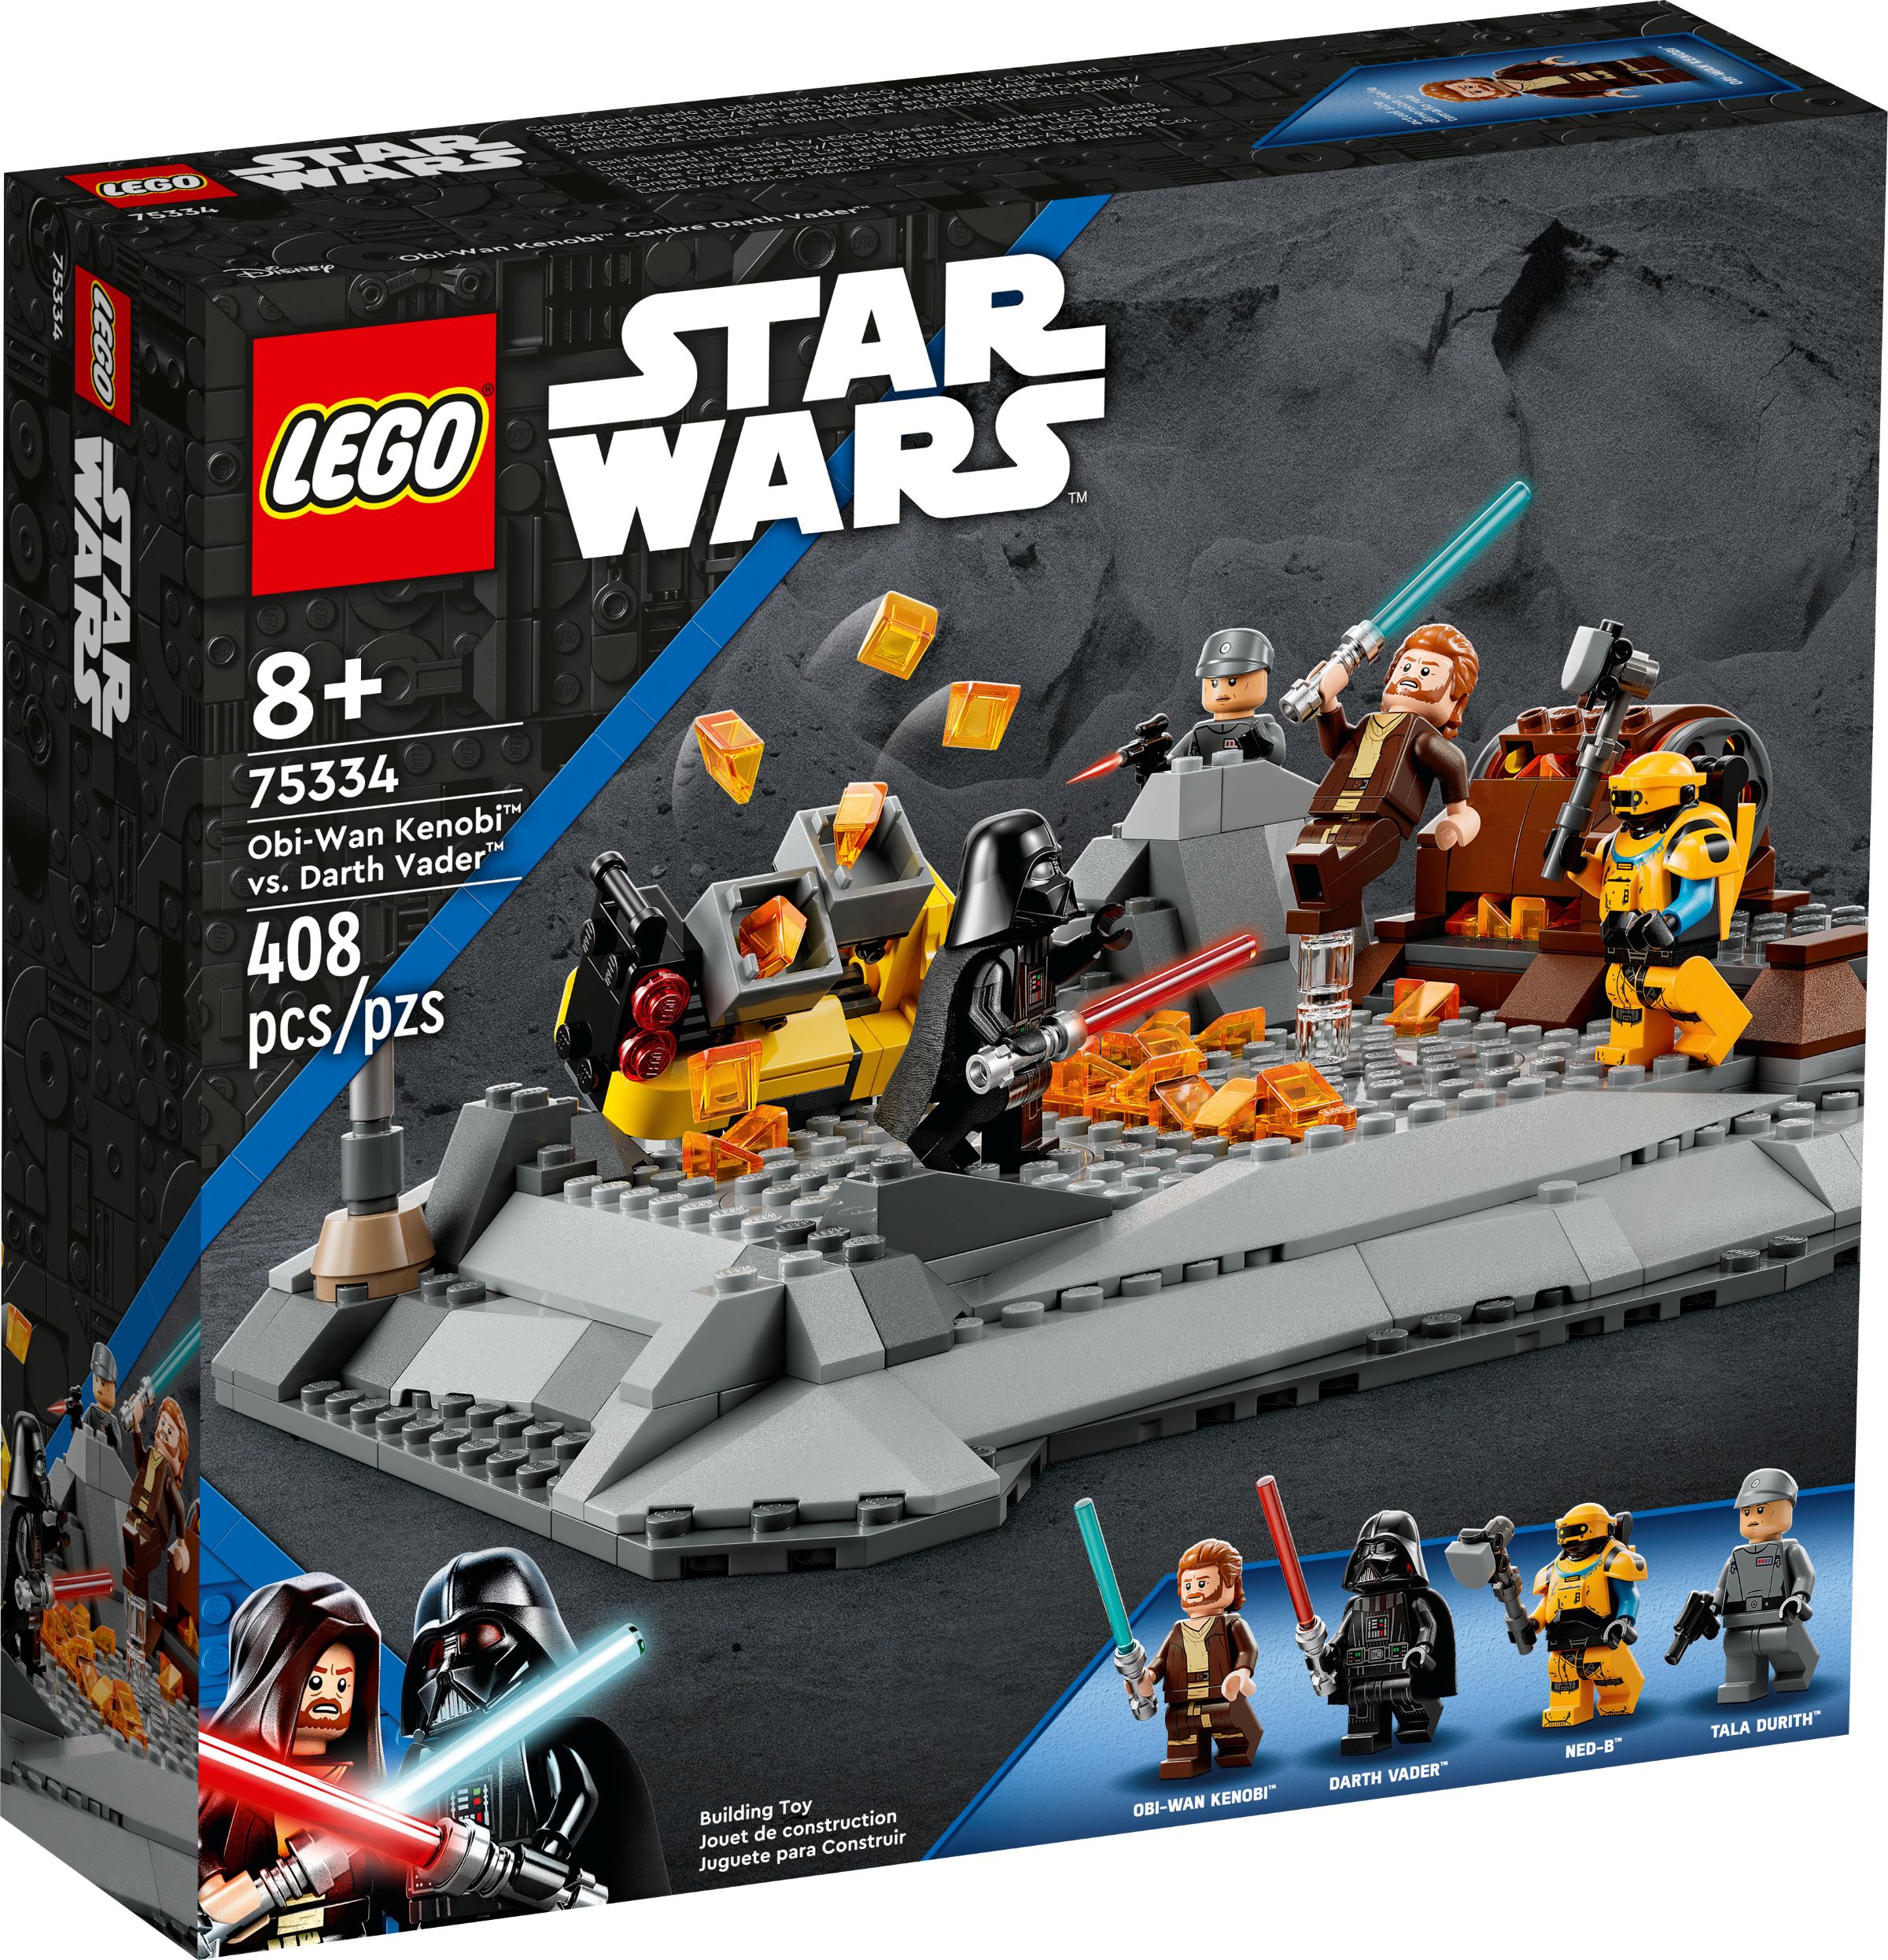 LEGO Star Wars 75334 Obi-Wan Kenobi™ vs. Darth Vader™ LEGO_75334_alt1.jpg